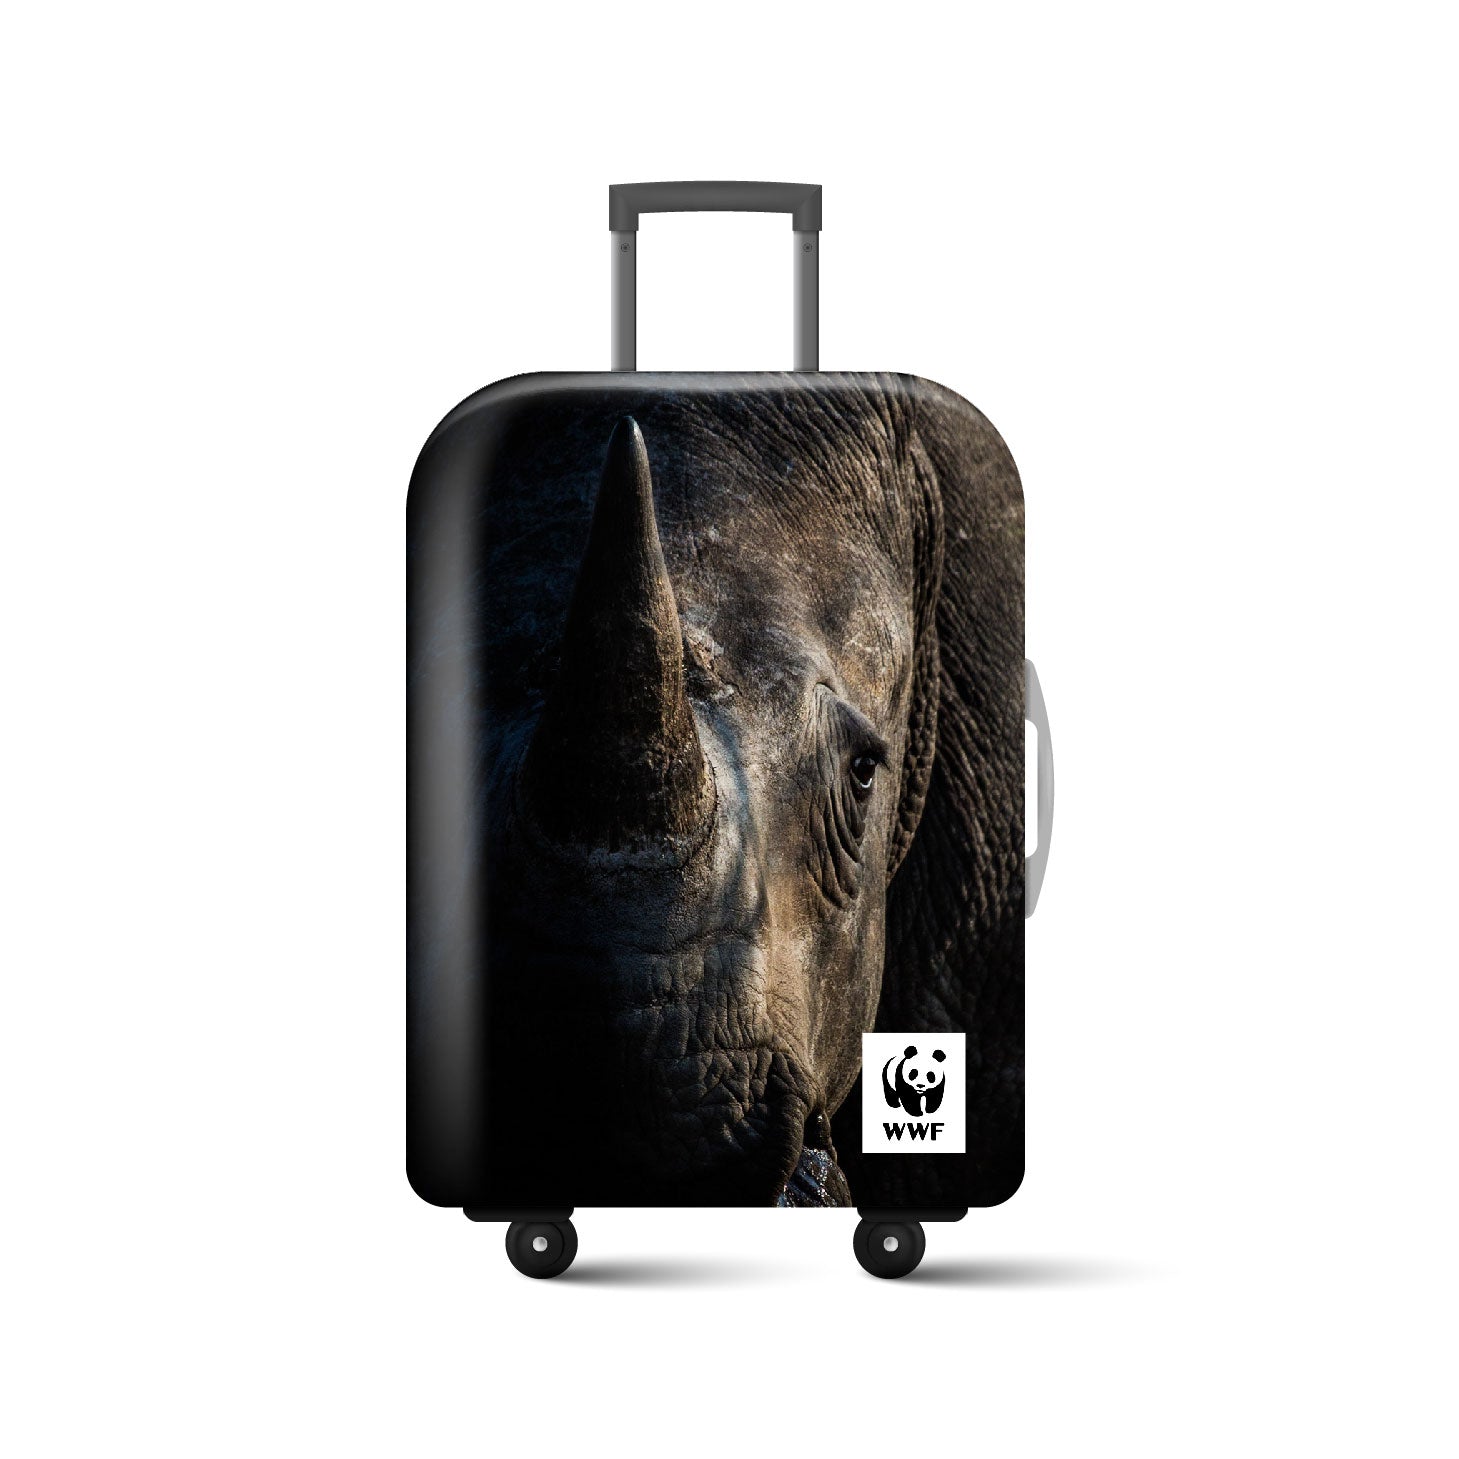 Rhino Suitcase Covers